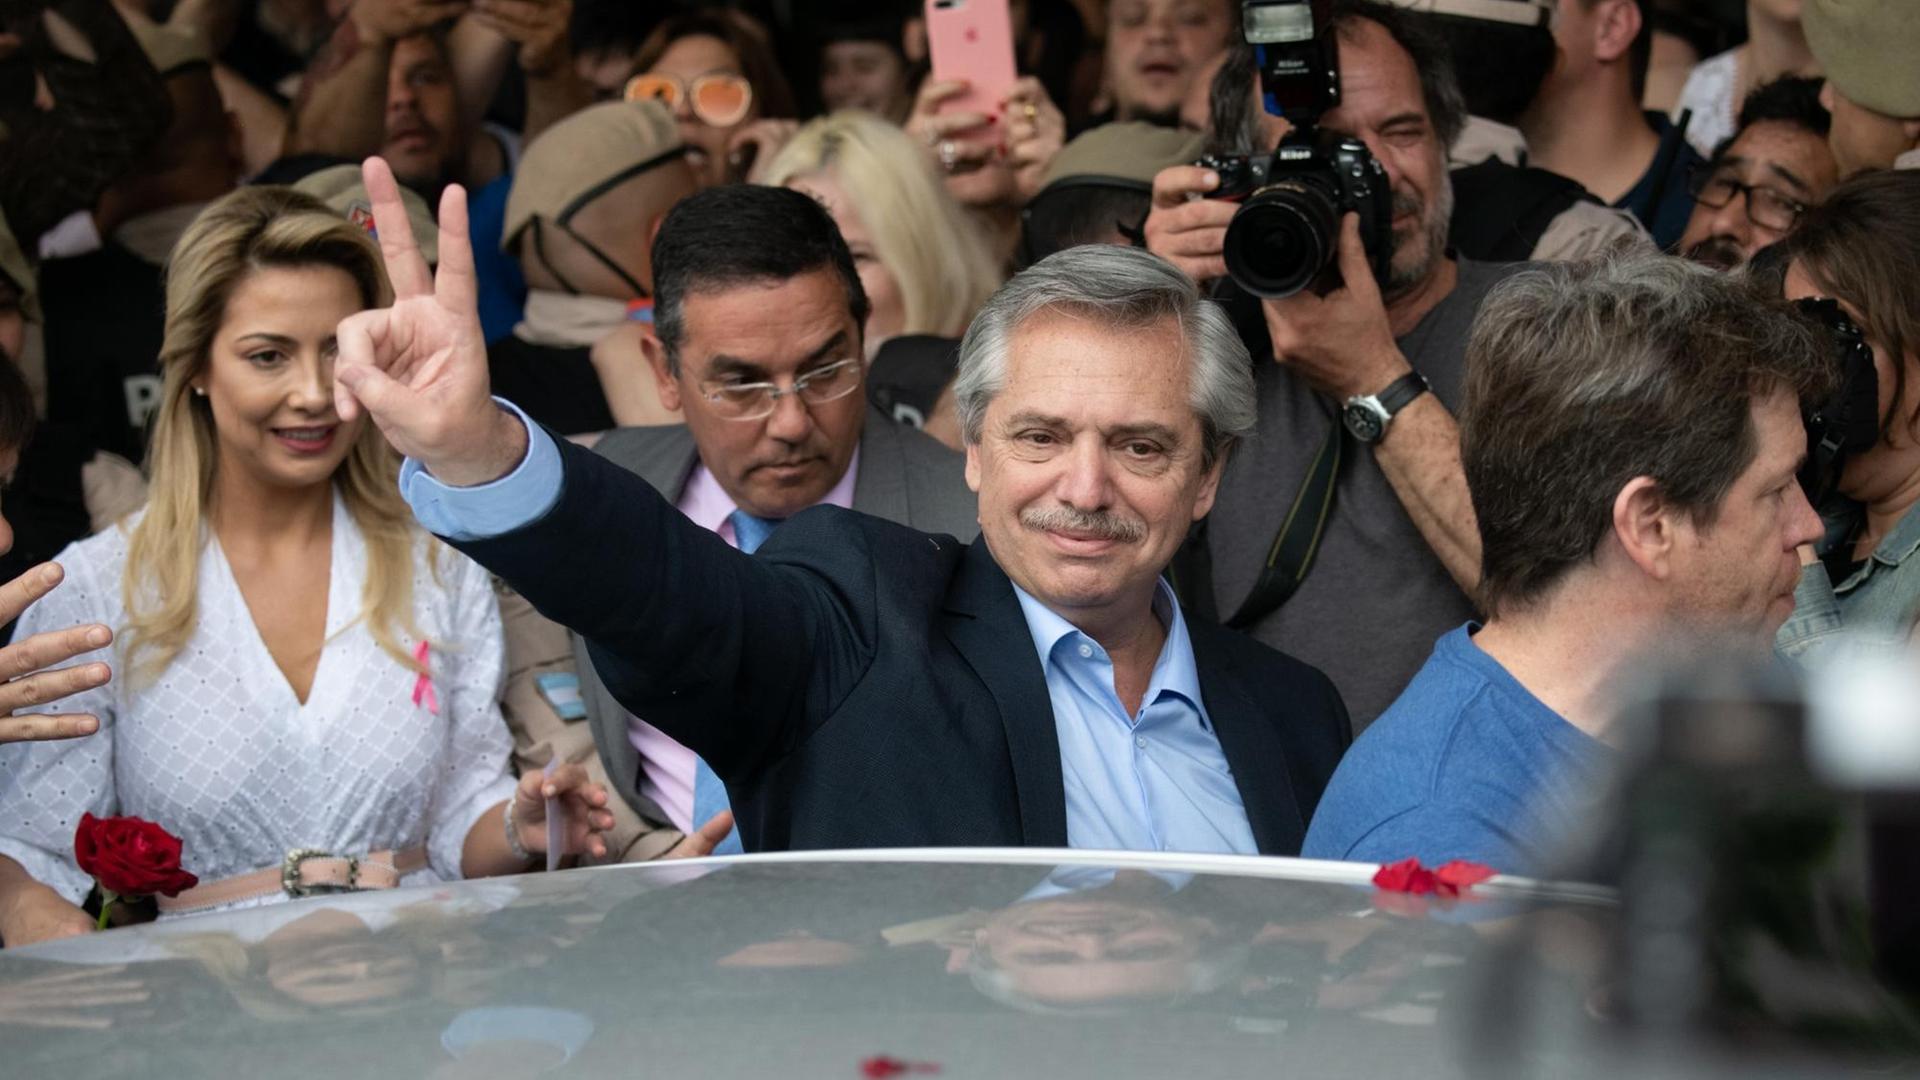 Alberto Ángel Fernández, Präsidentschaftskanidat des Parteienbündnisses Frente de Todos in Argentiien spreizt nach seiner Stimmangabe in Buenos Aires die Finger einer Hand. Links steht seine Frau. | Verwendung weltweit